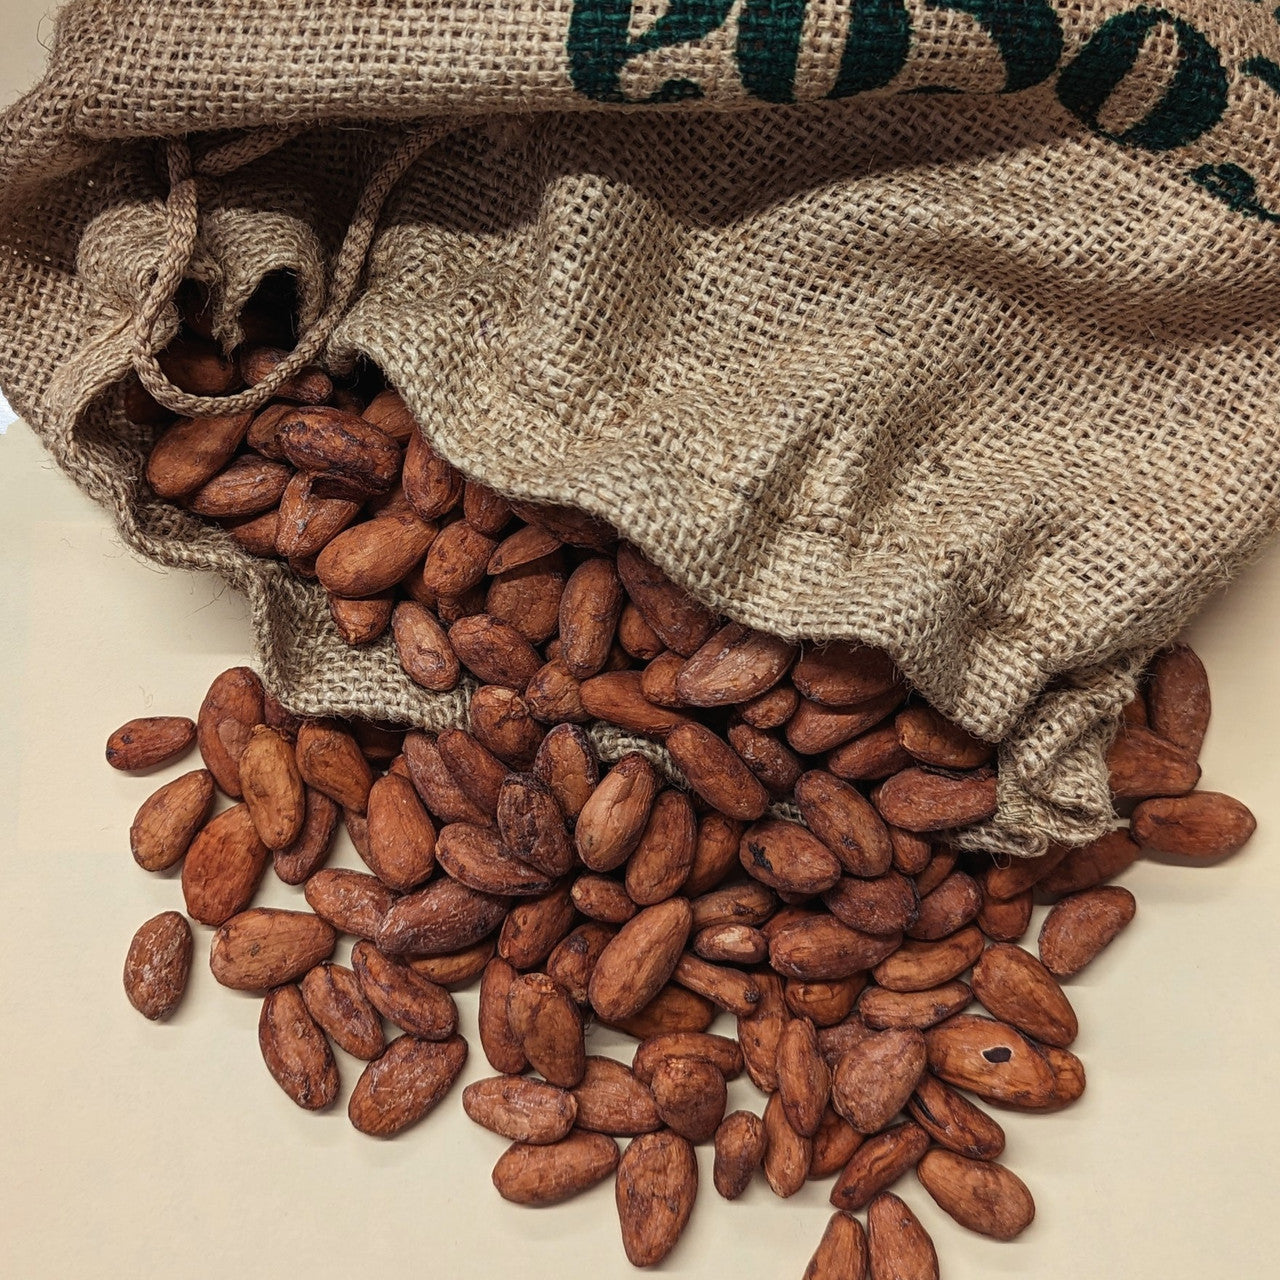 Hacienda Victoria Cacao Beans 3kg - Ecuadorian Single Plantation